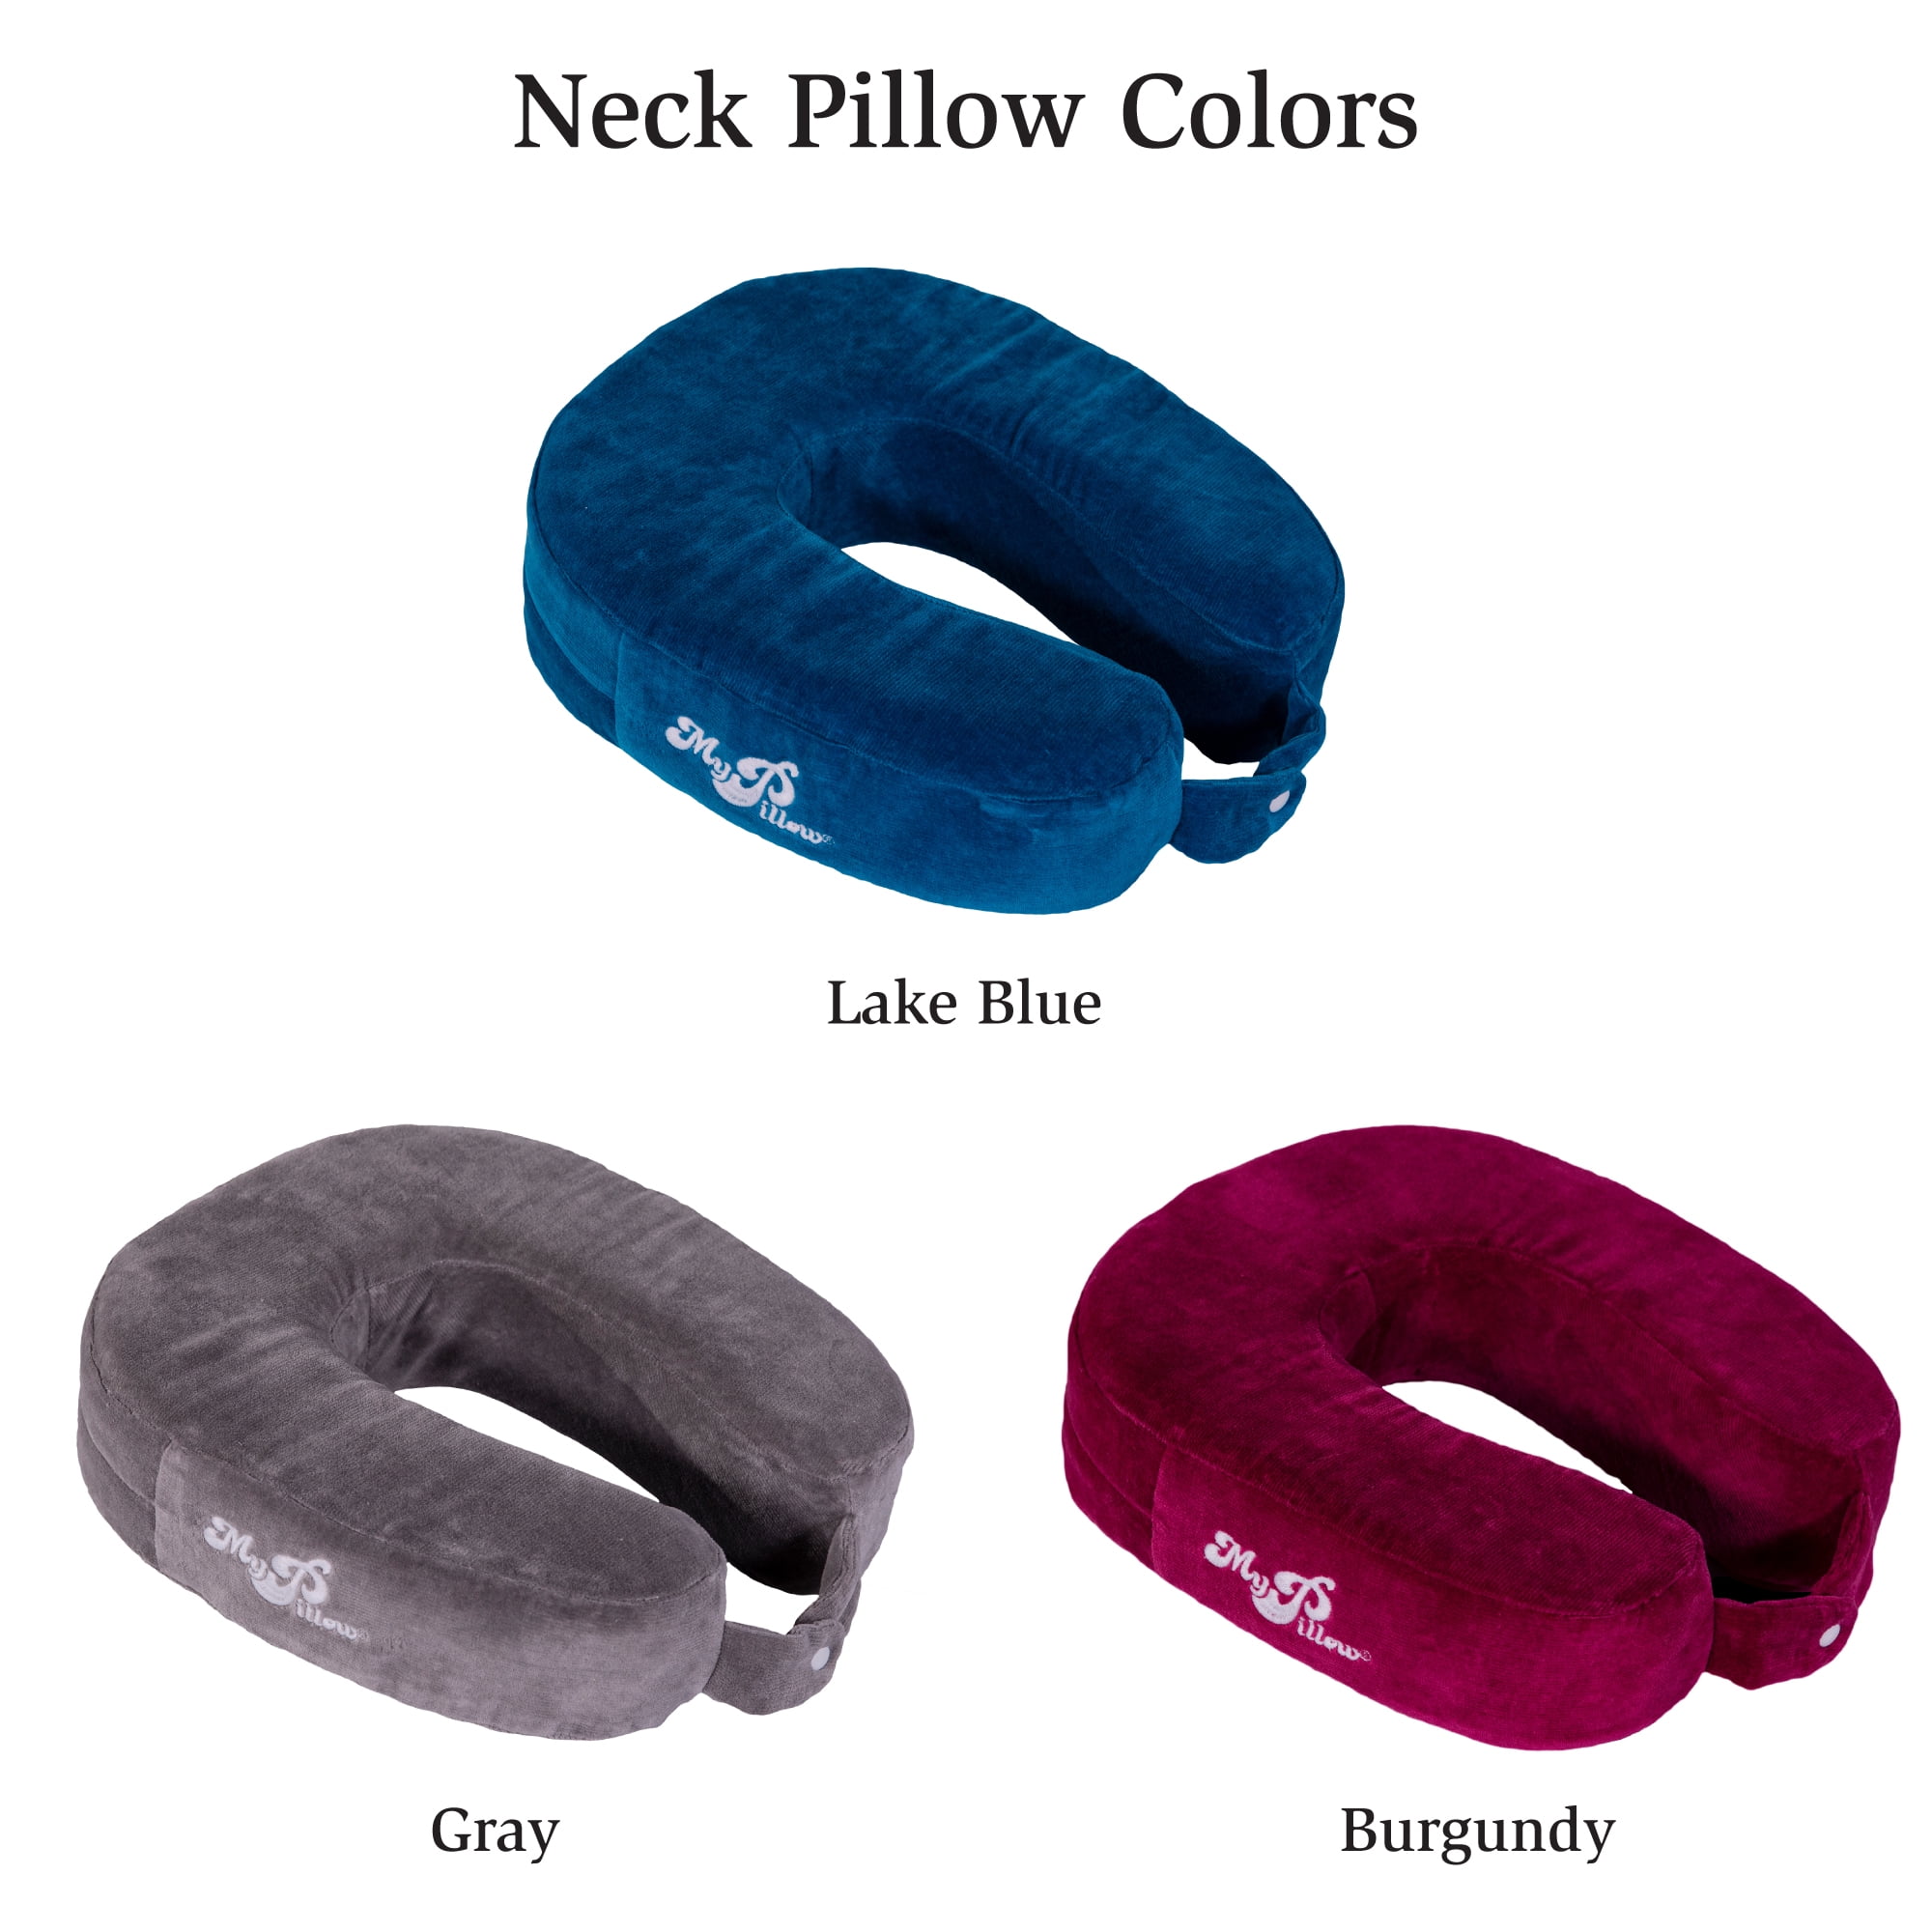 mr neck pillow